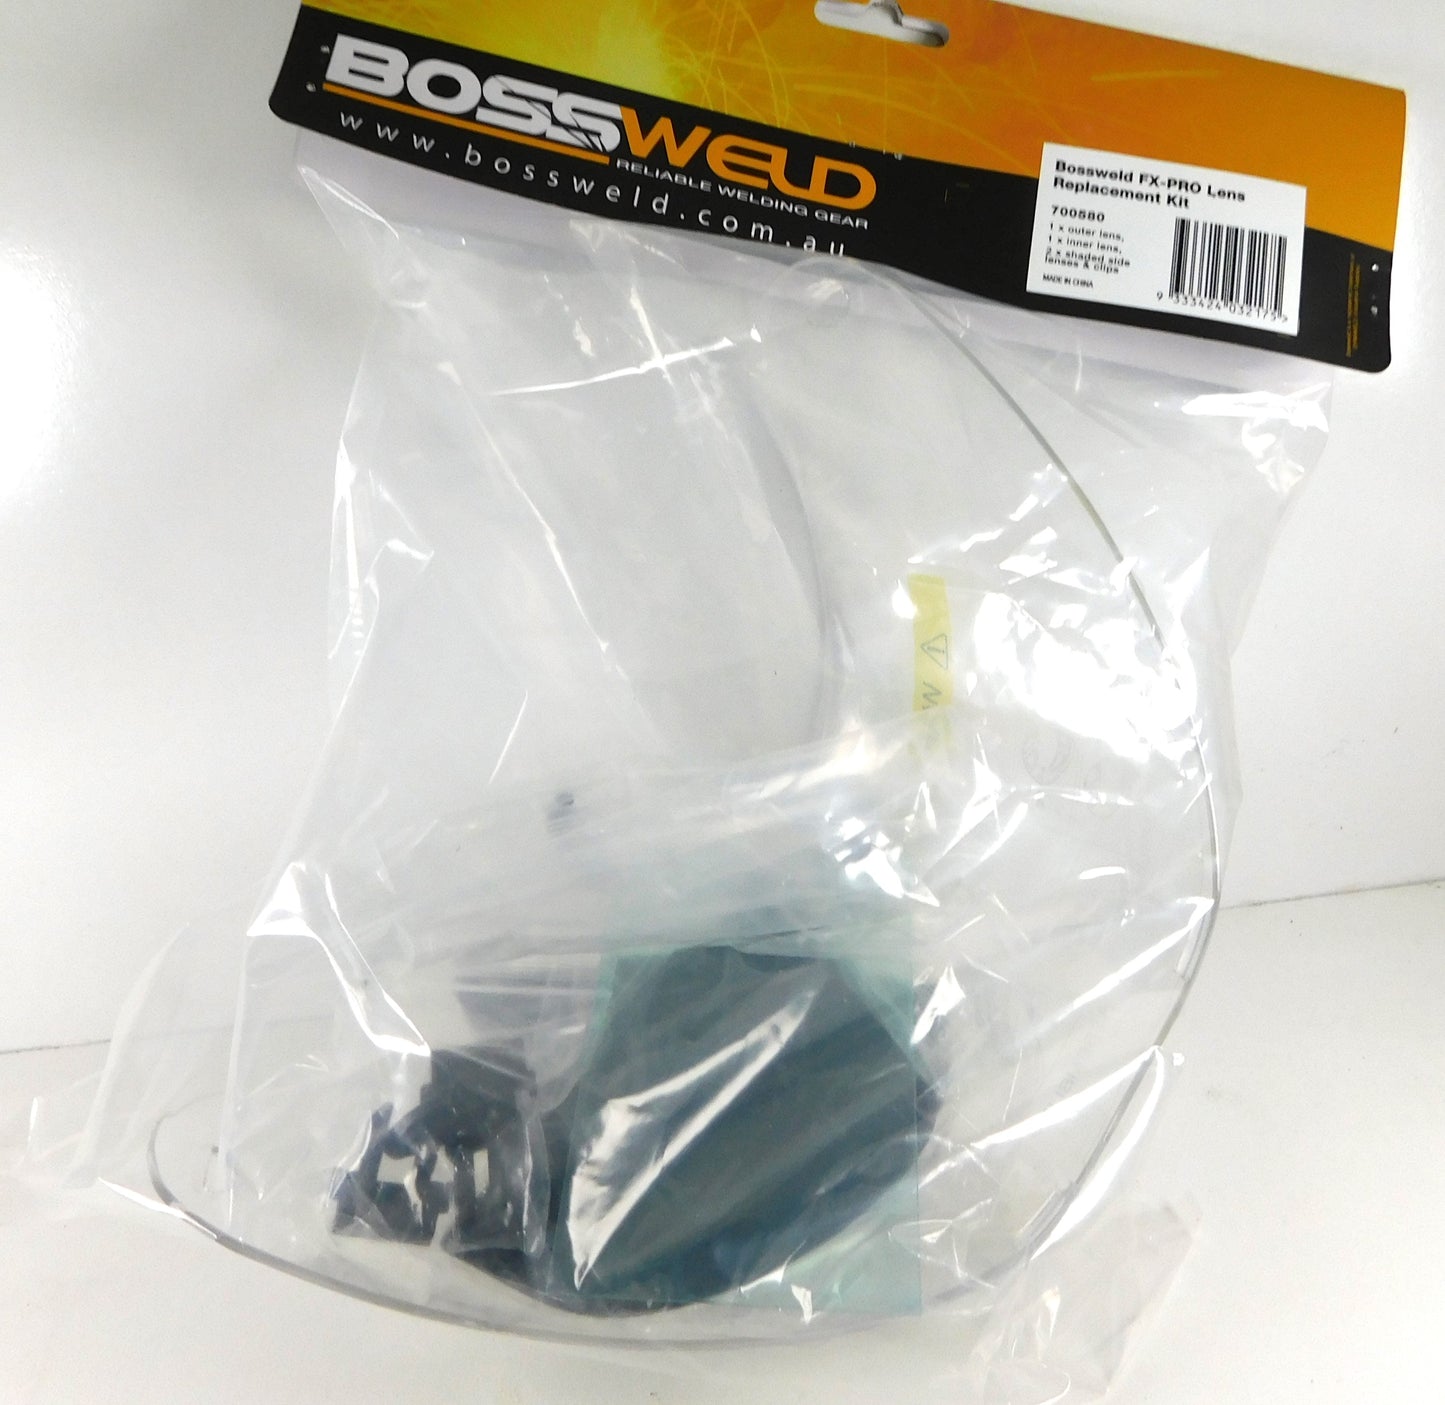 Bunnings/Bossweld [700580] FX-PRO Lens Replacement Kit